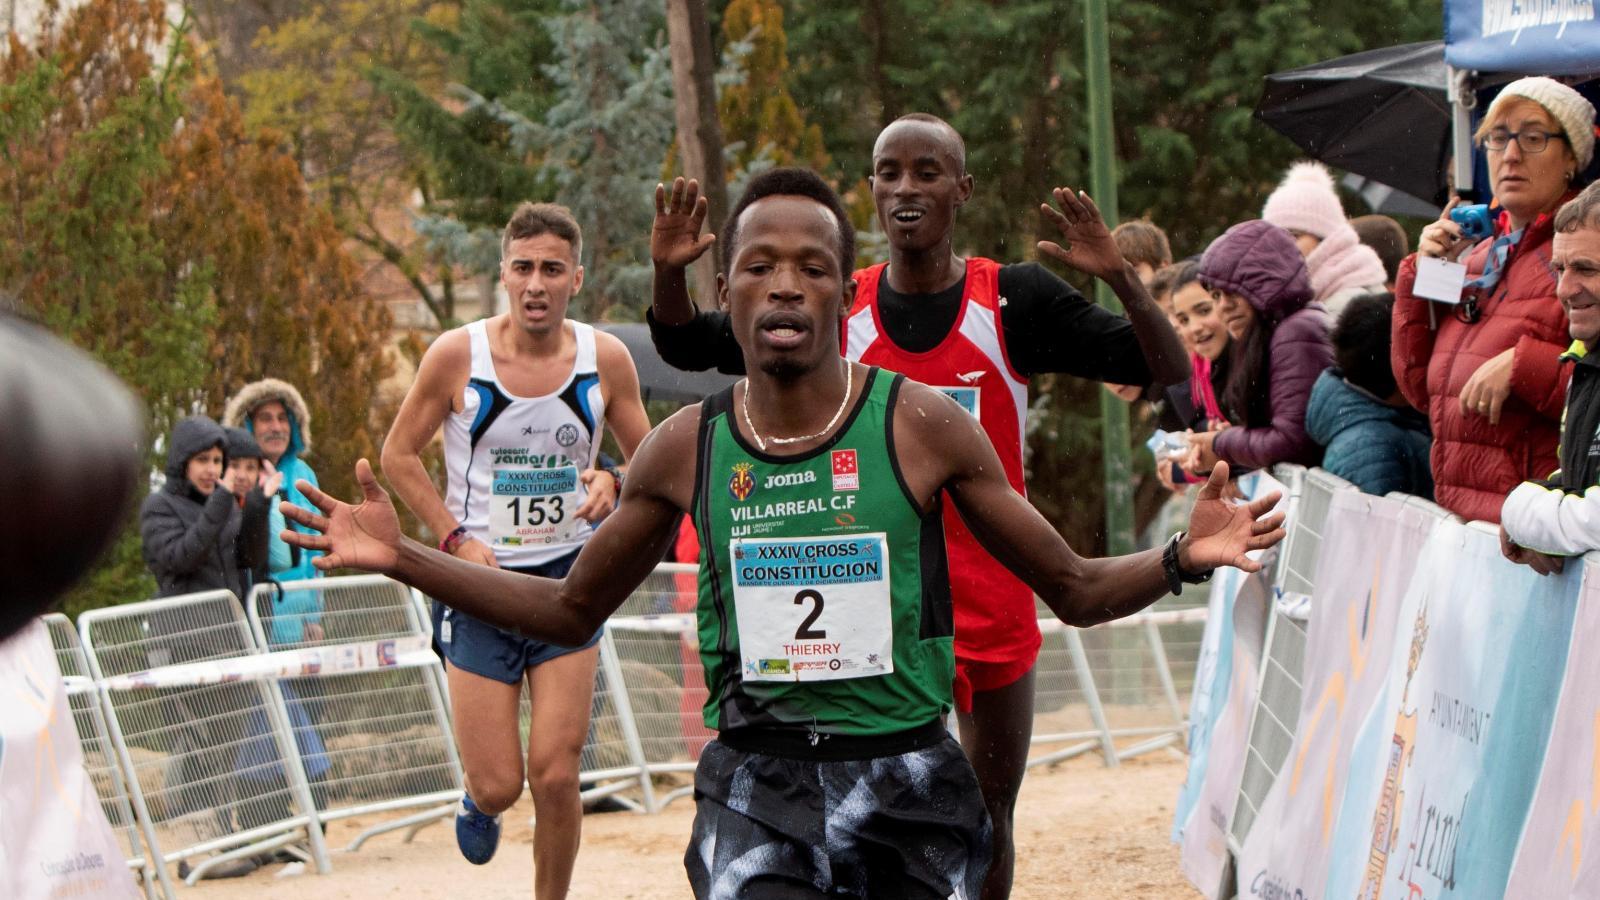 El atleta burundés Thierry Ndikumwenayo adquiere la nacionalidad española